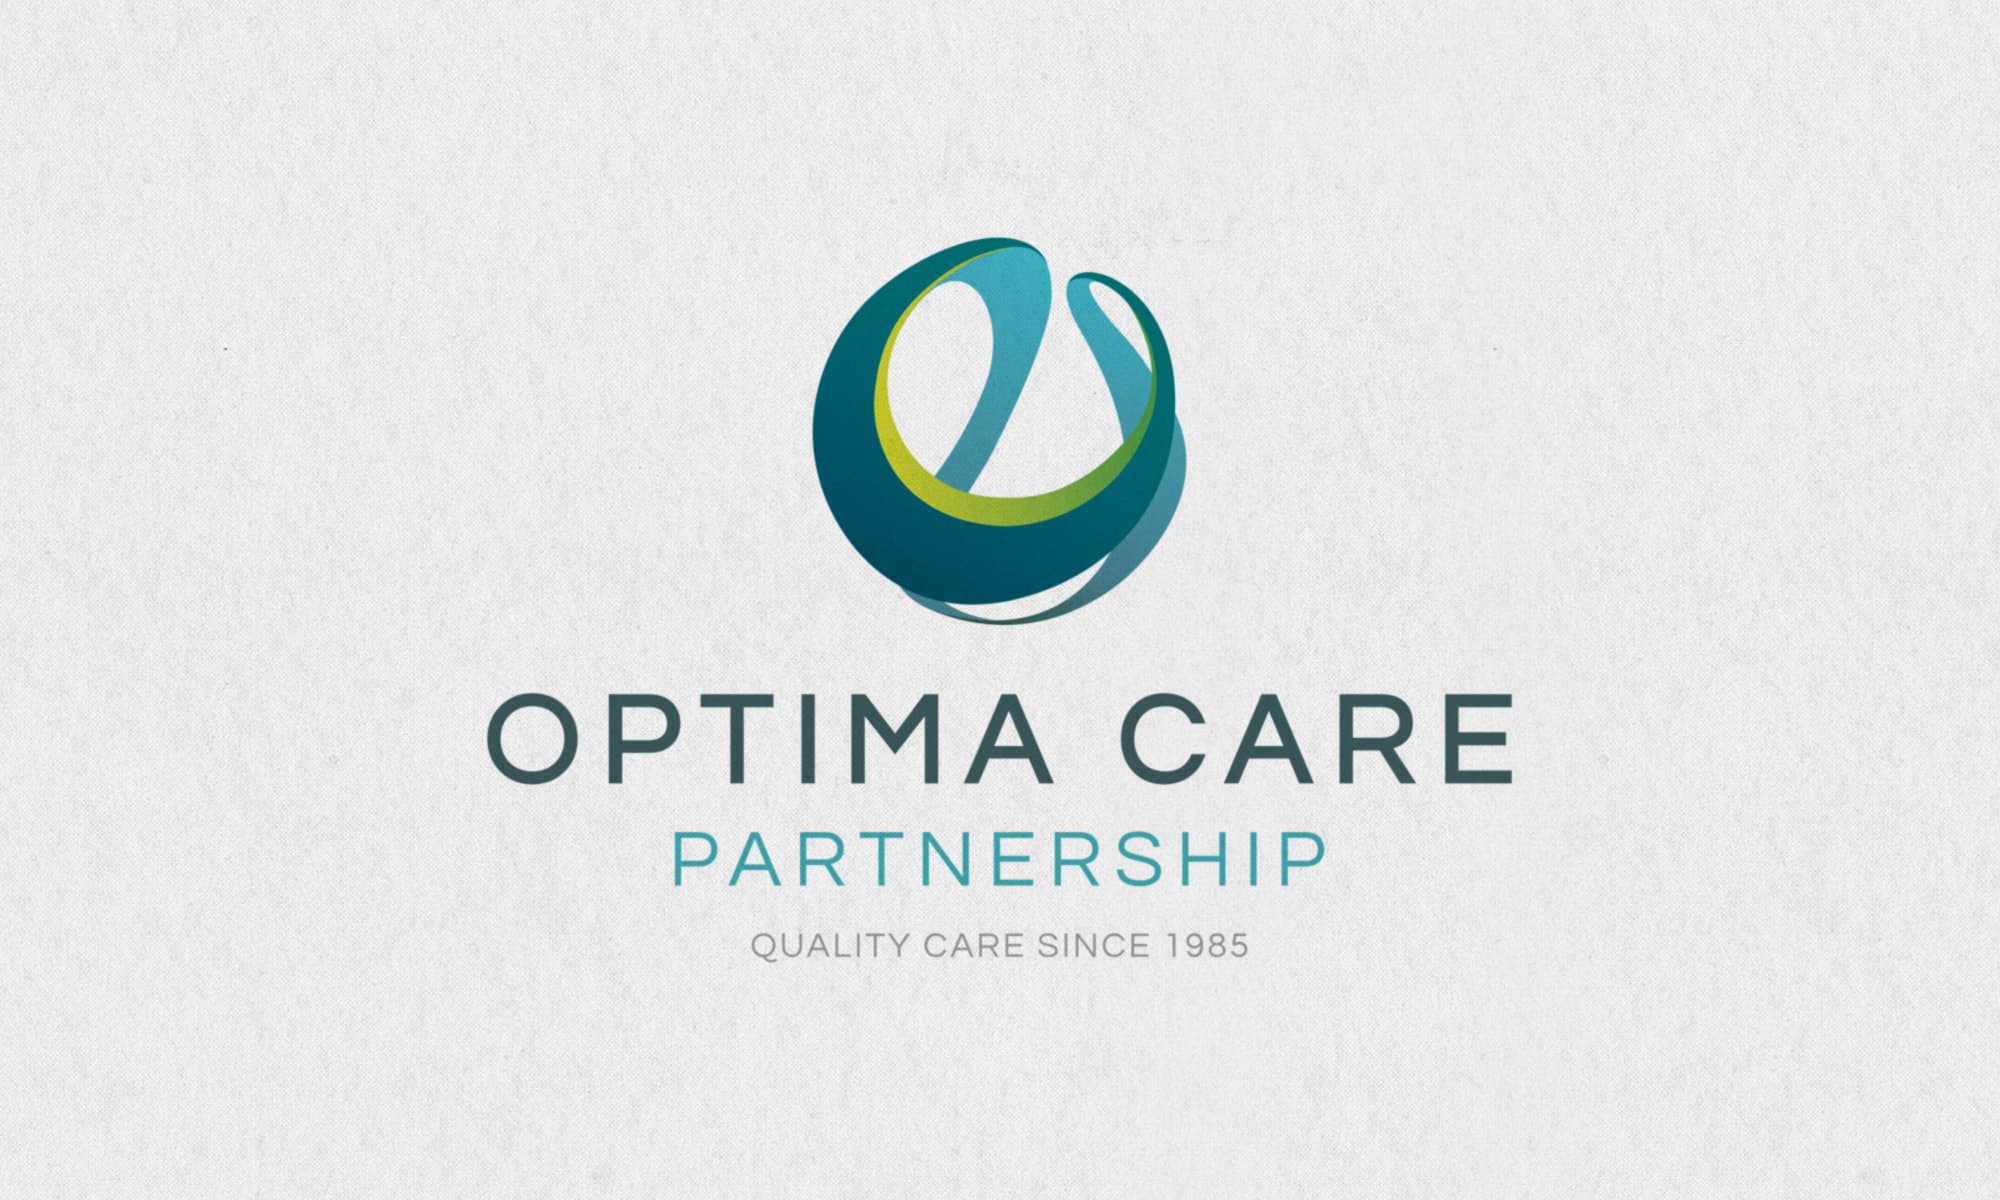 Optima Care Residential Care Homes Branding and Logo Design